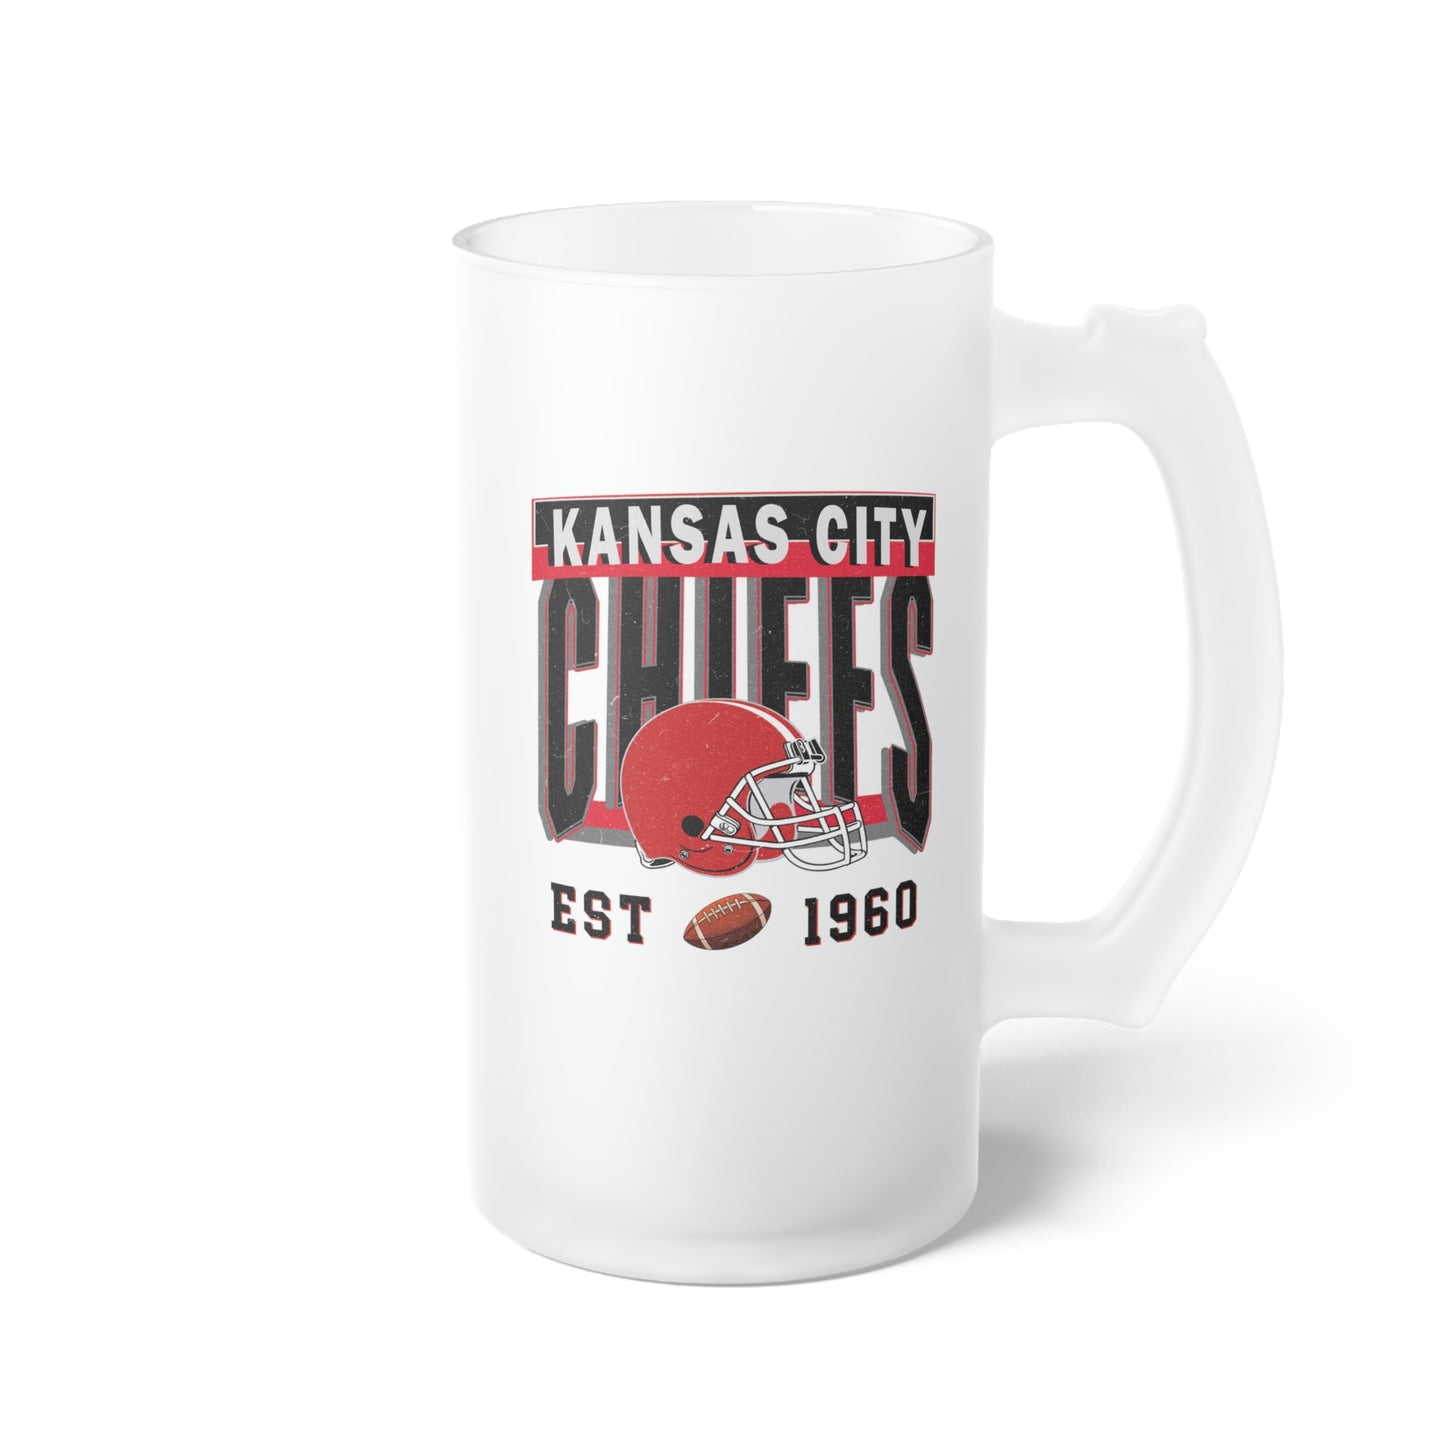 Kansas City Football Frosted Glass Beer Mug